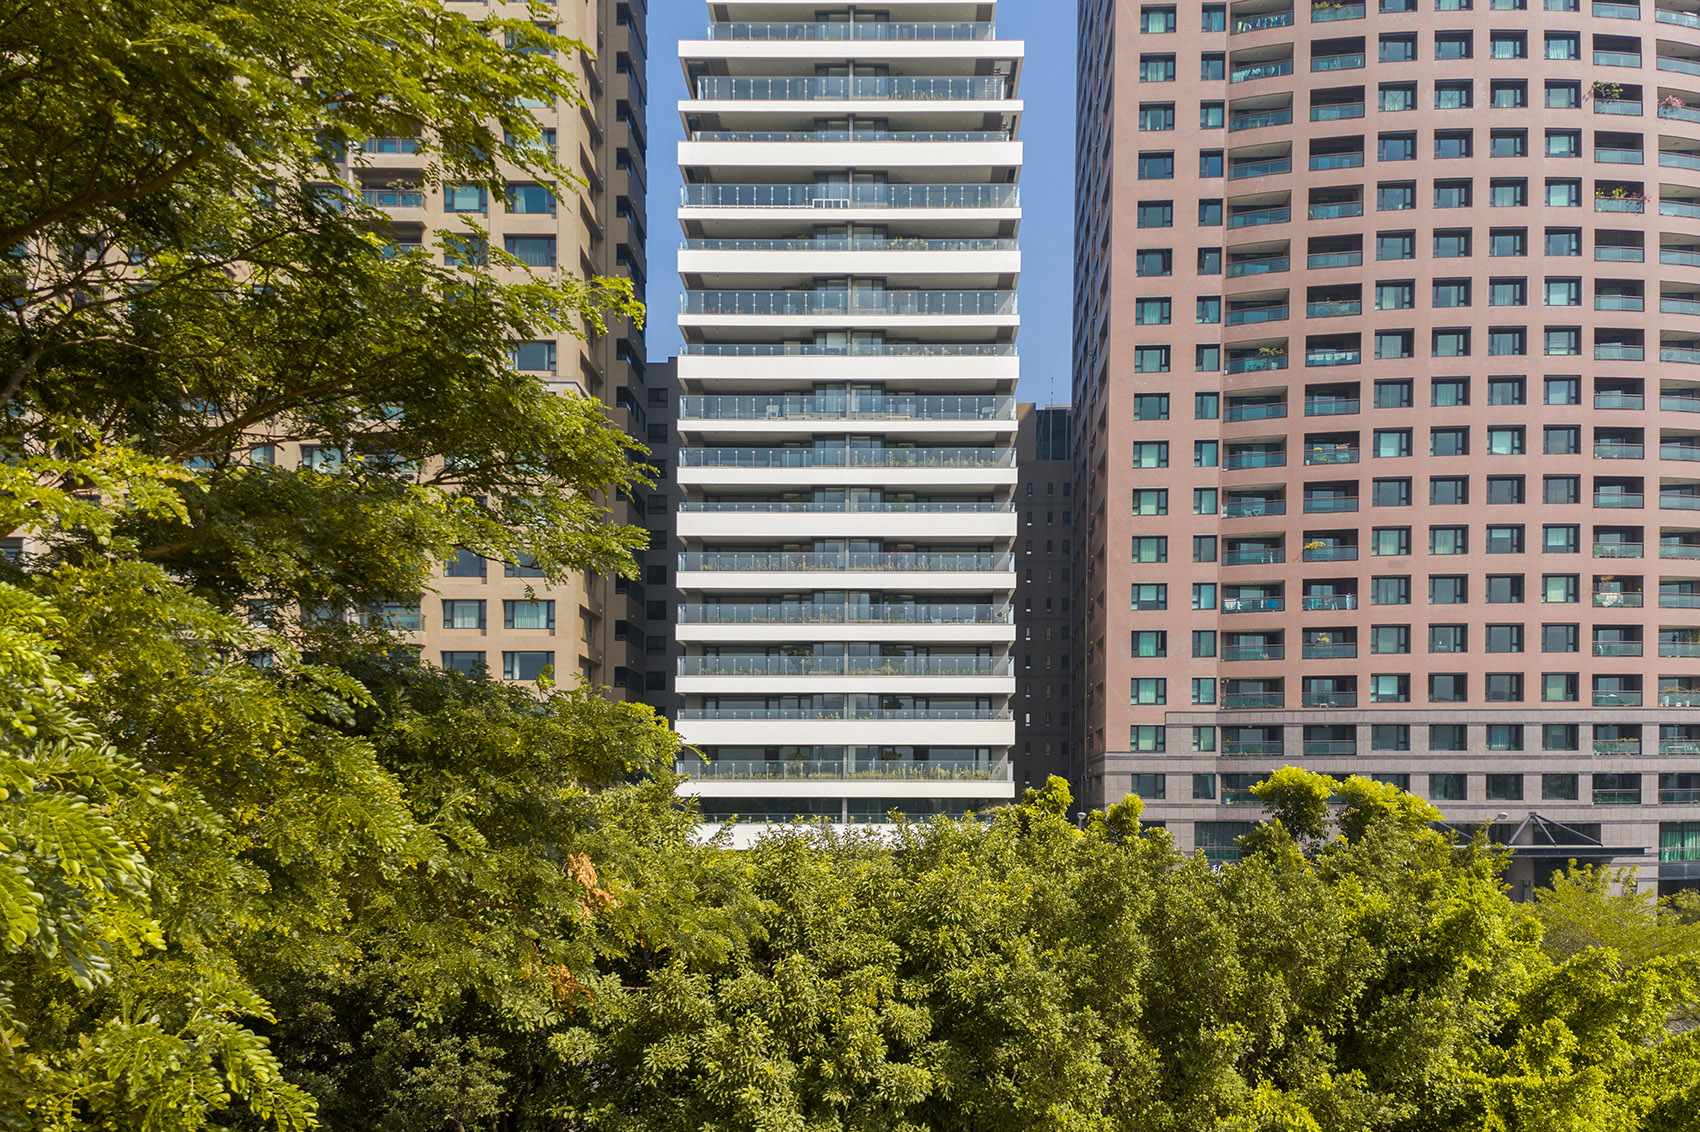 One More住宅楼，台湾/城市环境中的自然生活-9